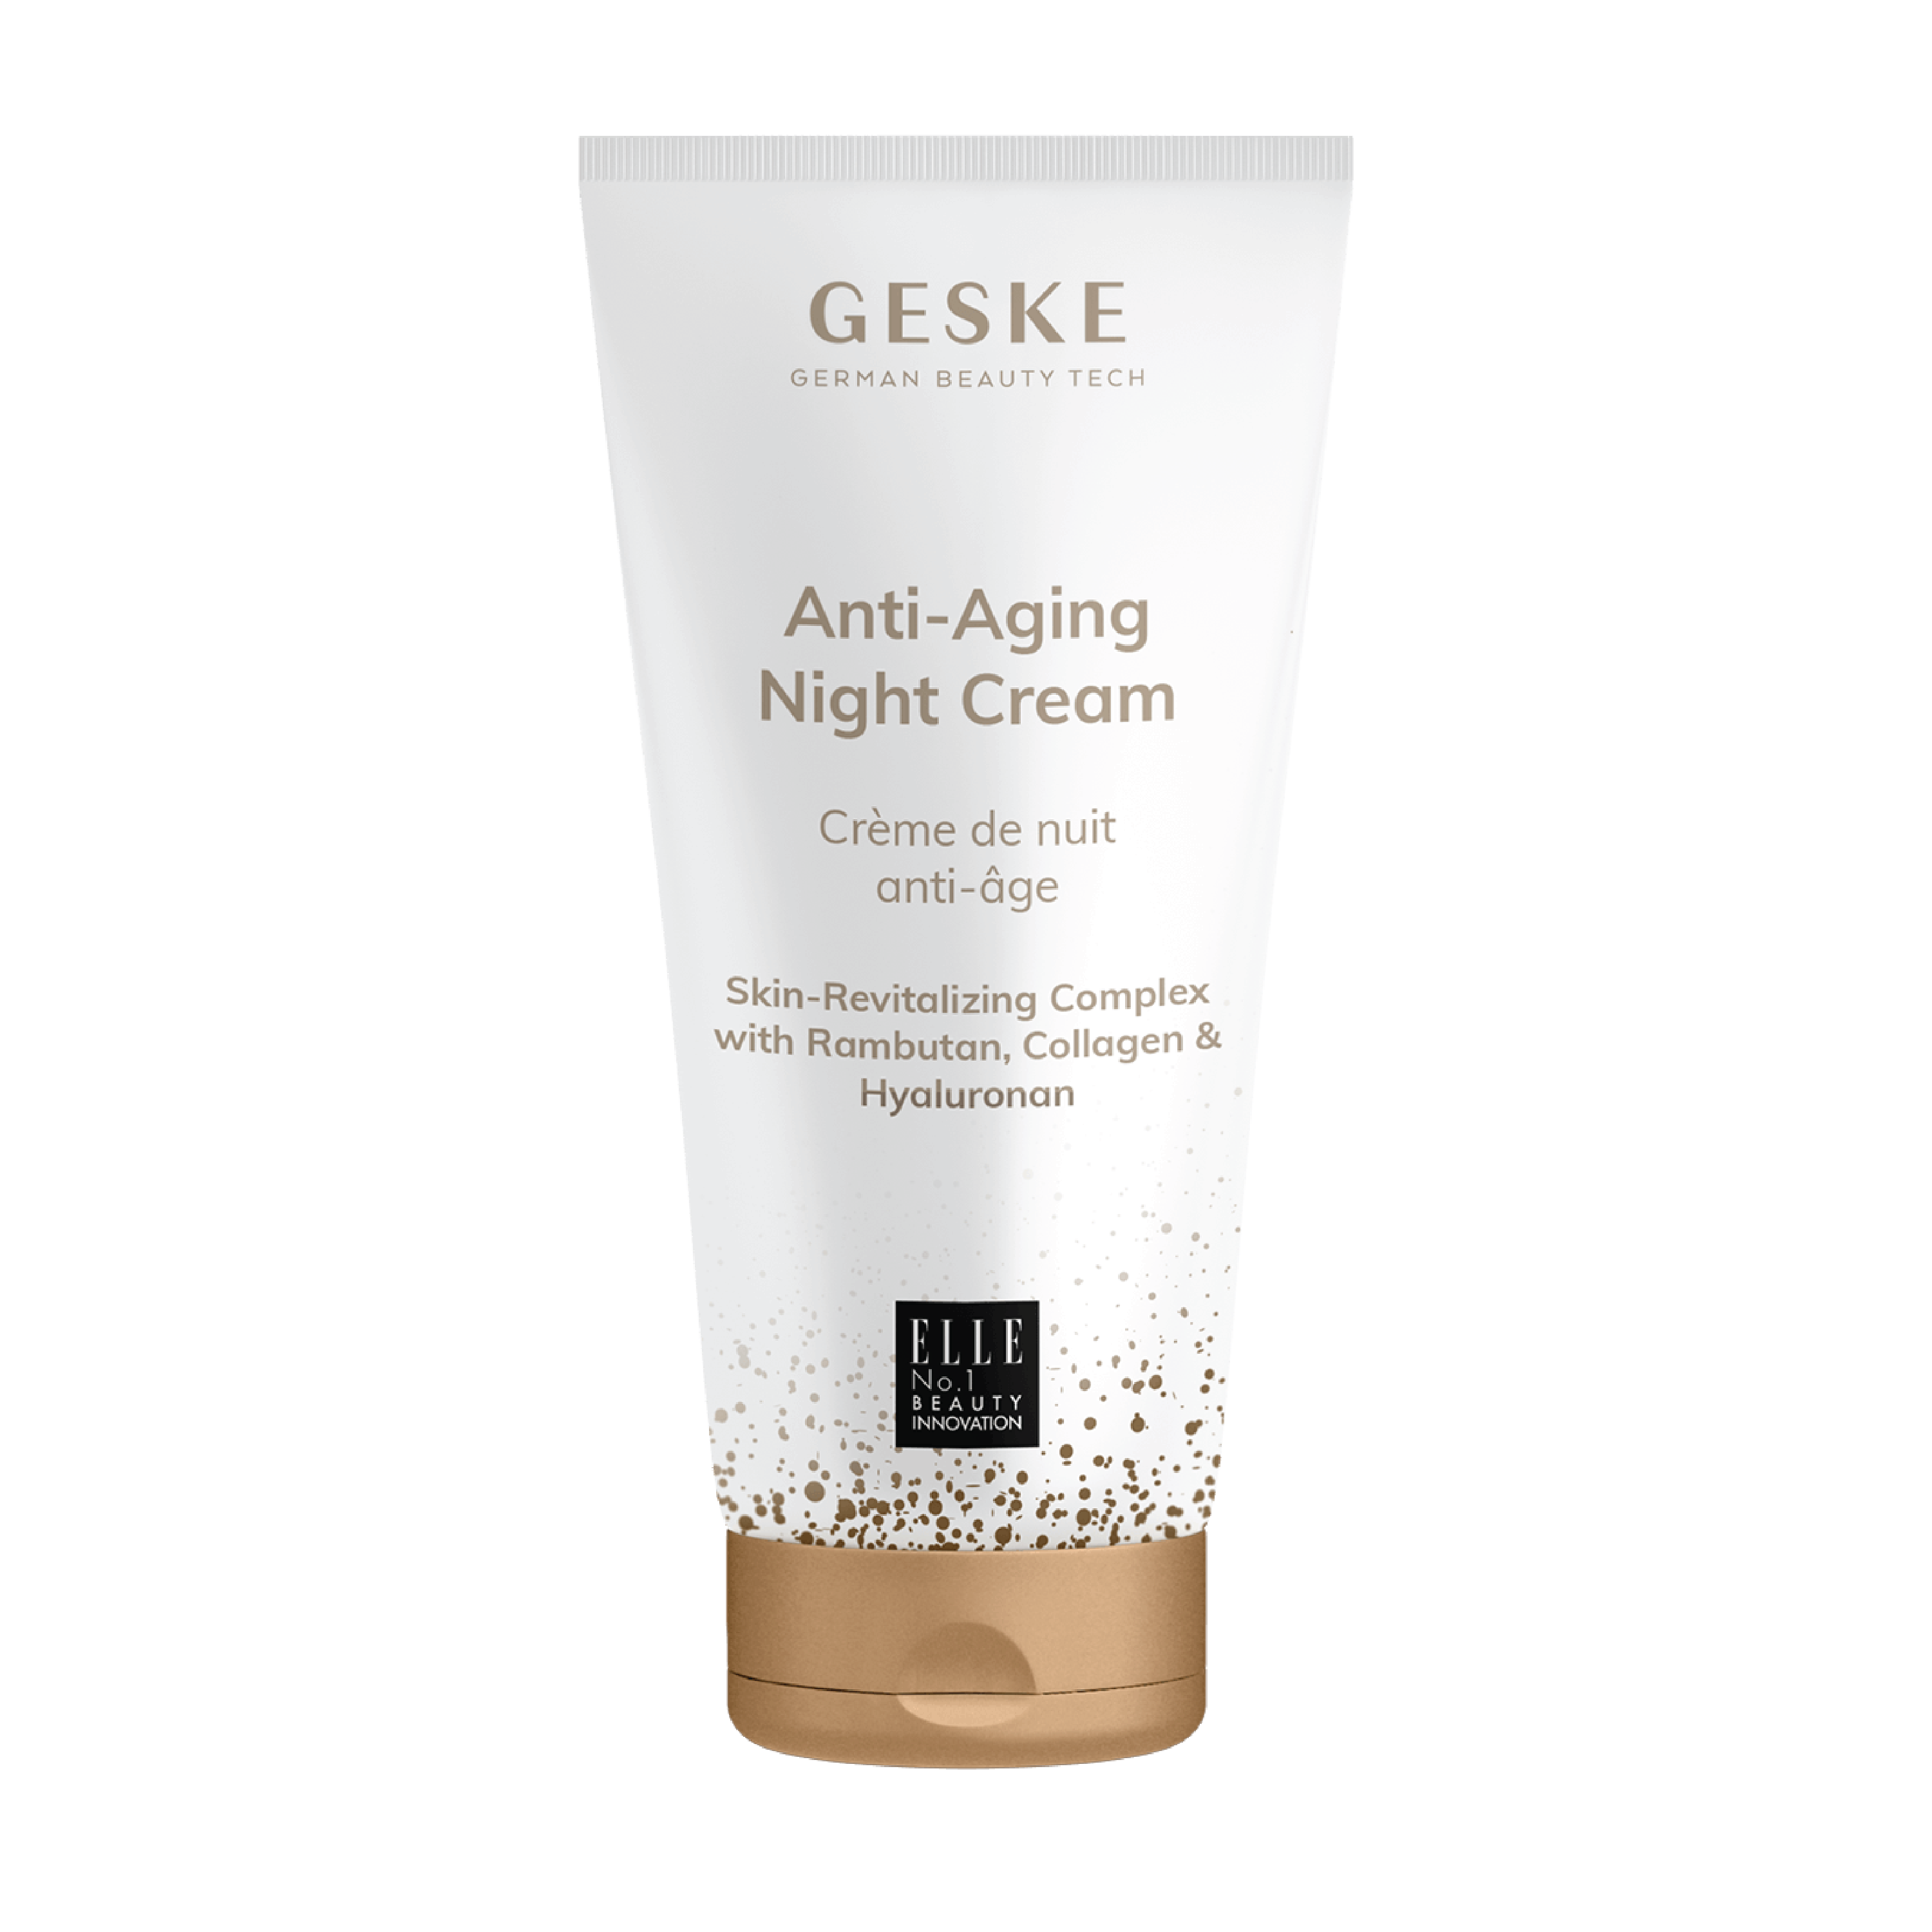 Geske Anti-Aging Night Cream, 100 ml